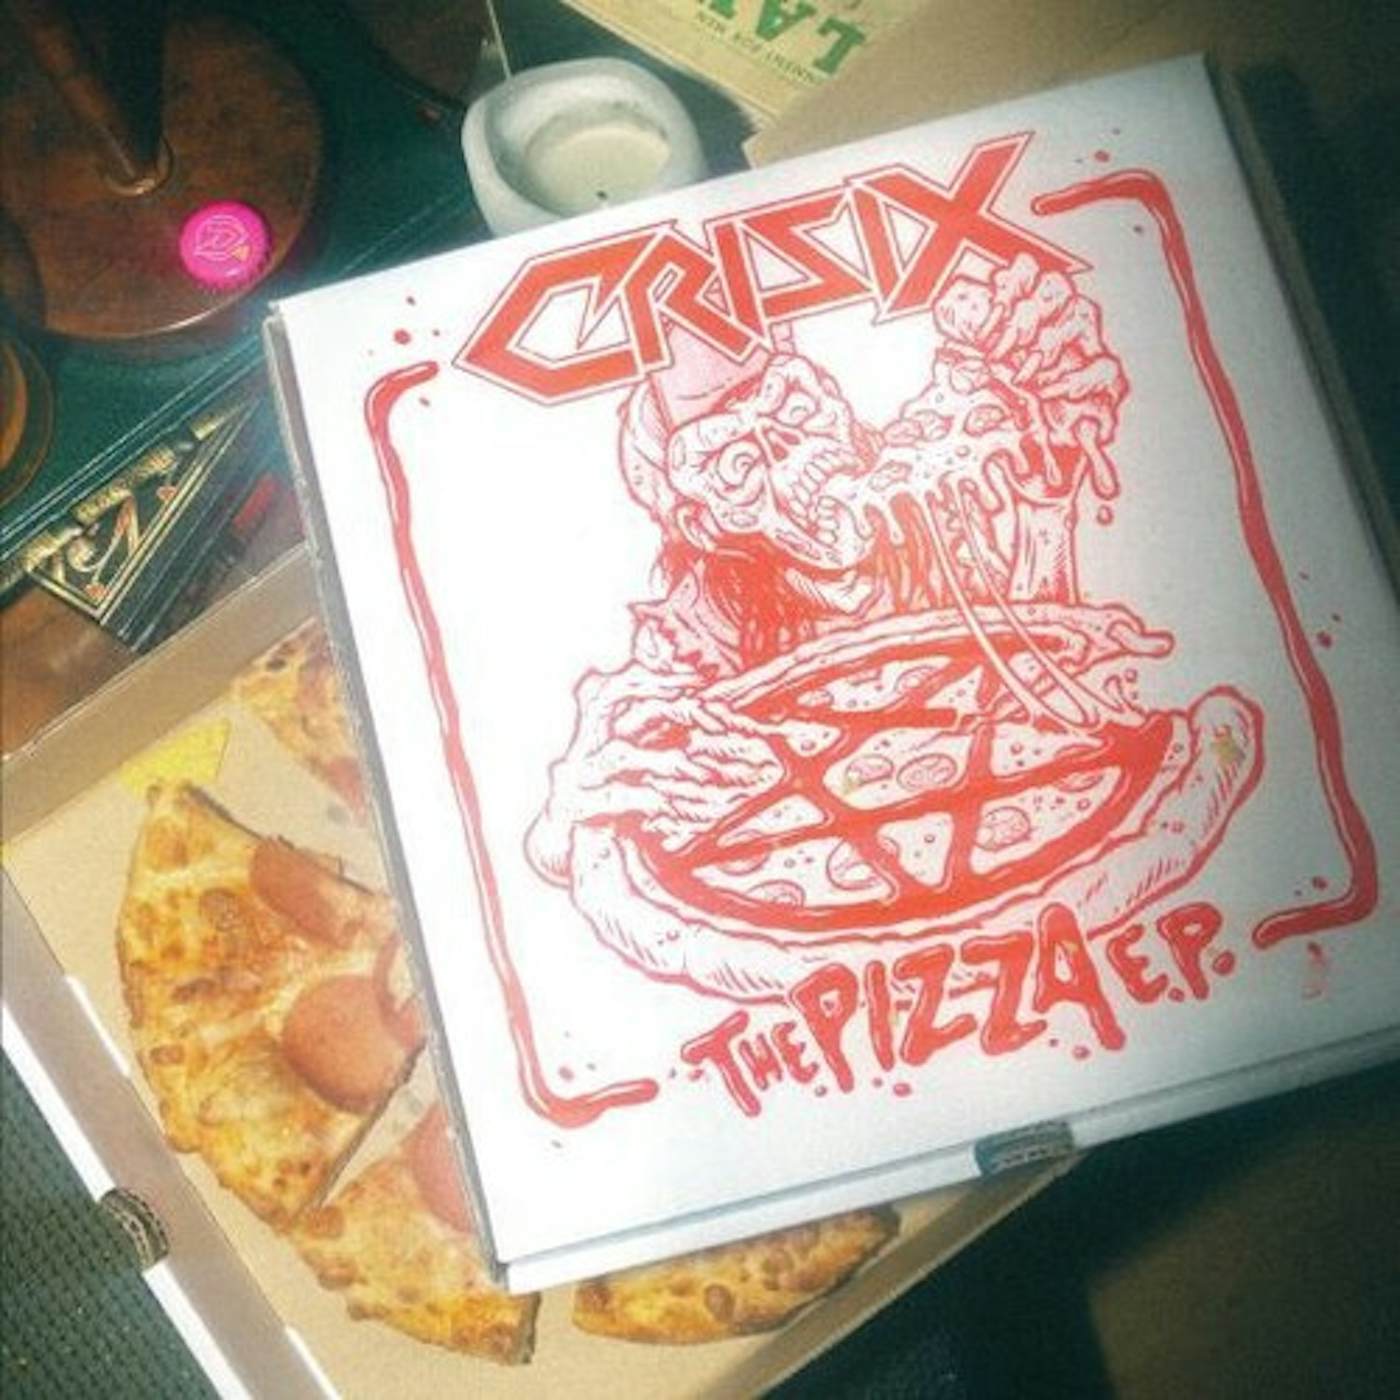 Crisix PIZZA EP (RED VINYL) Vinyl Record